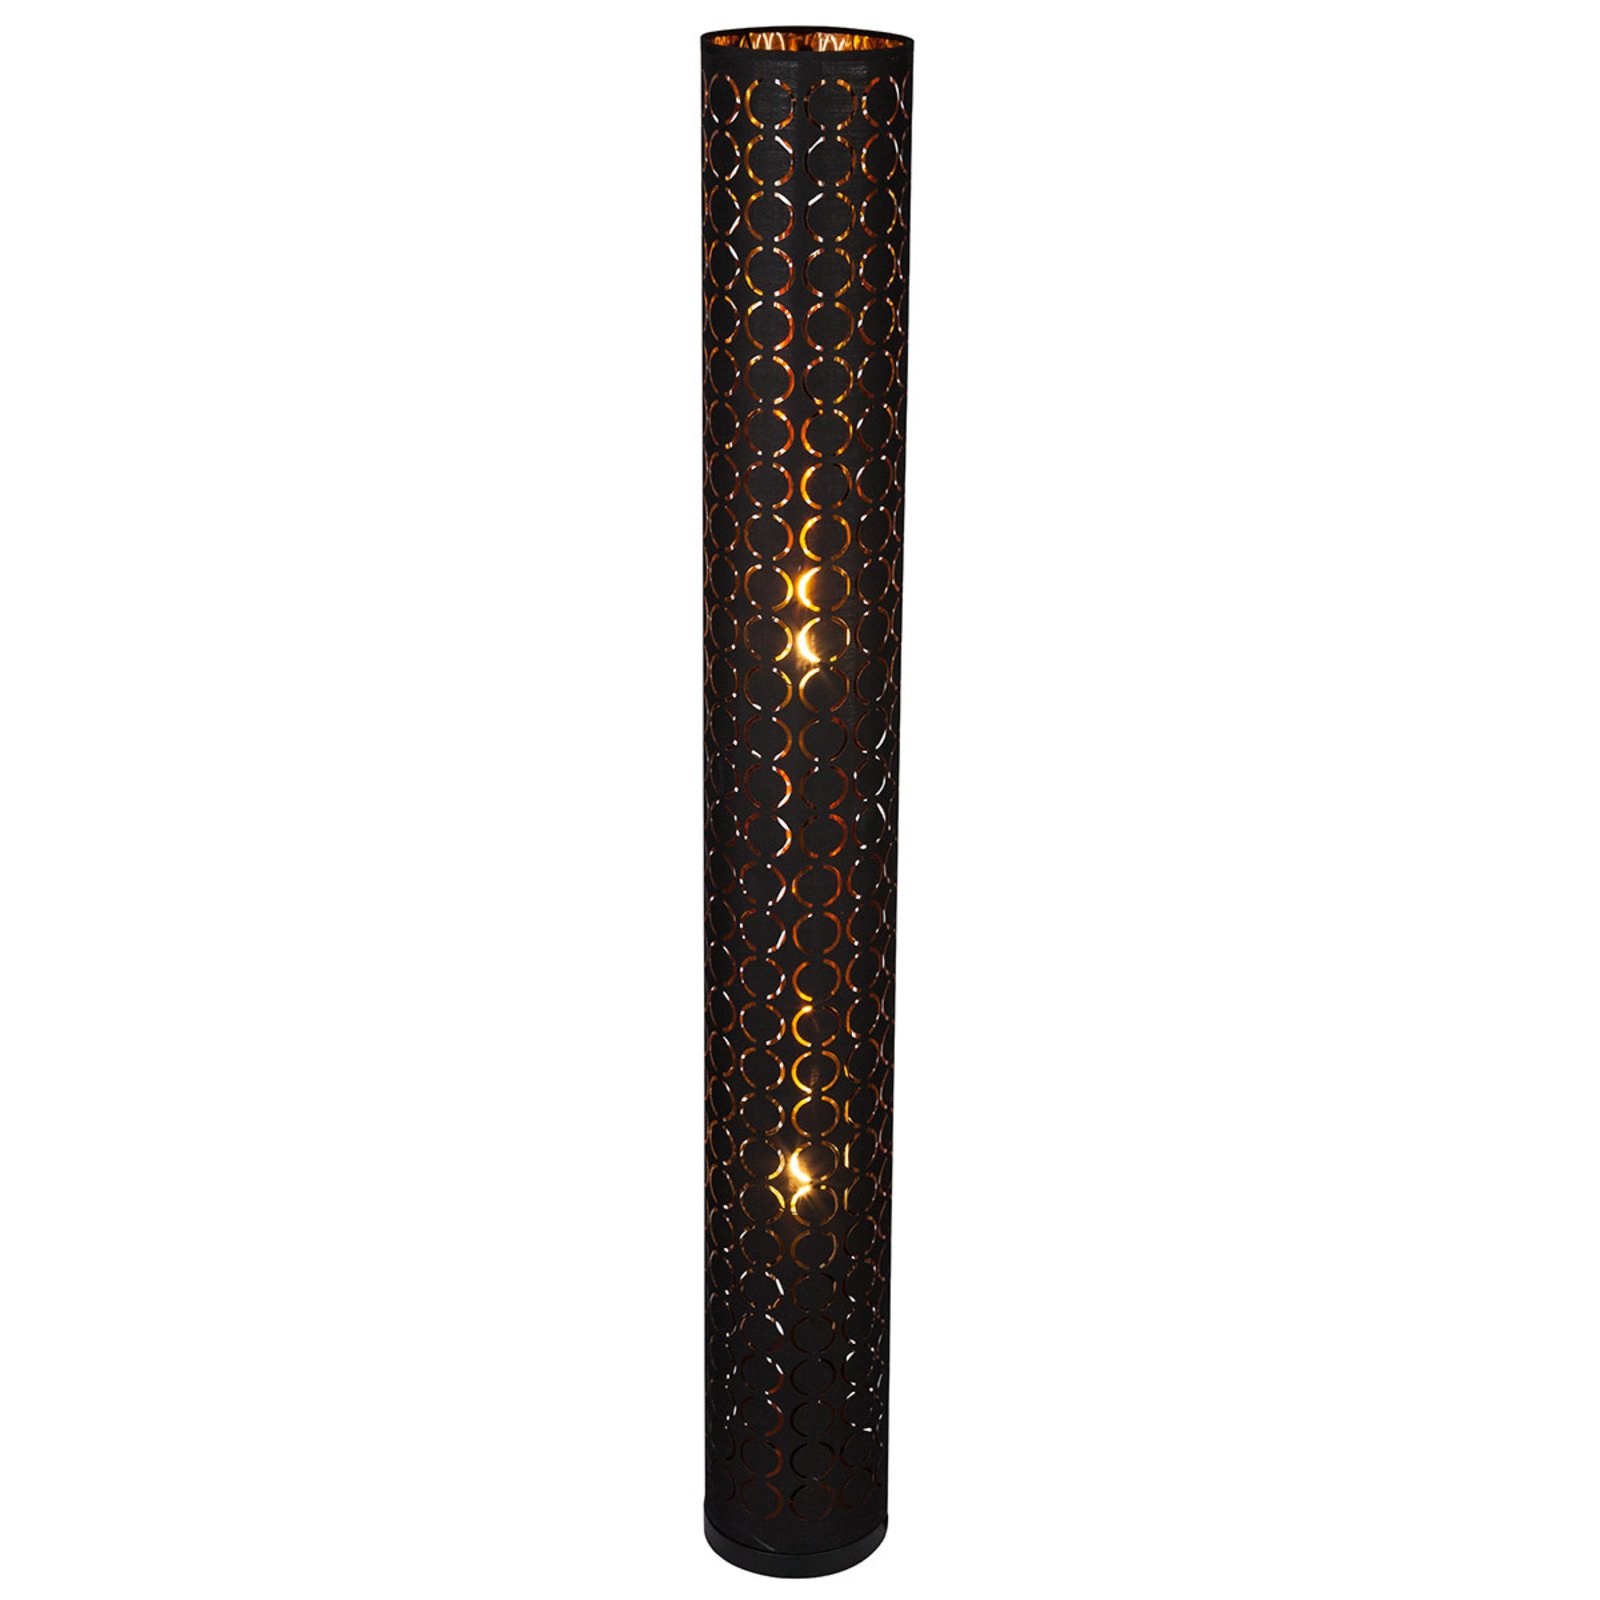 Harald gulvlampe i orientalsk design, sort